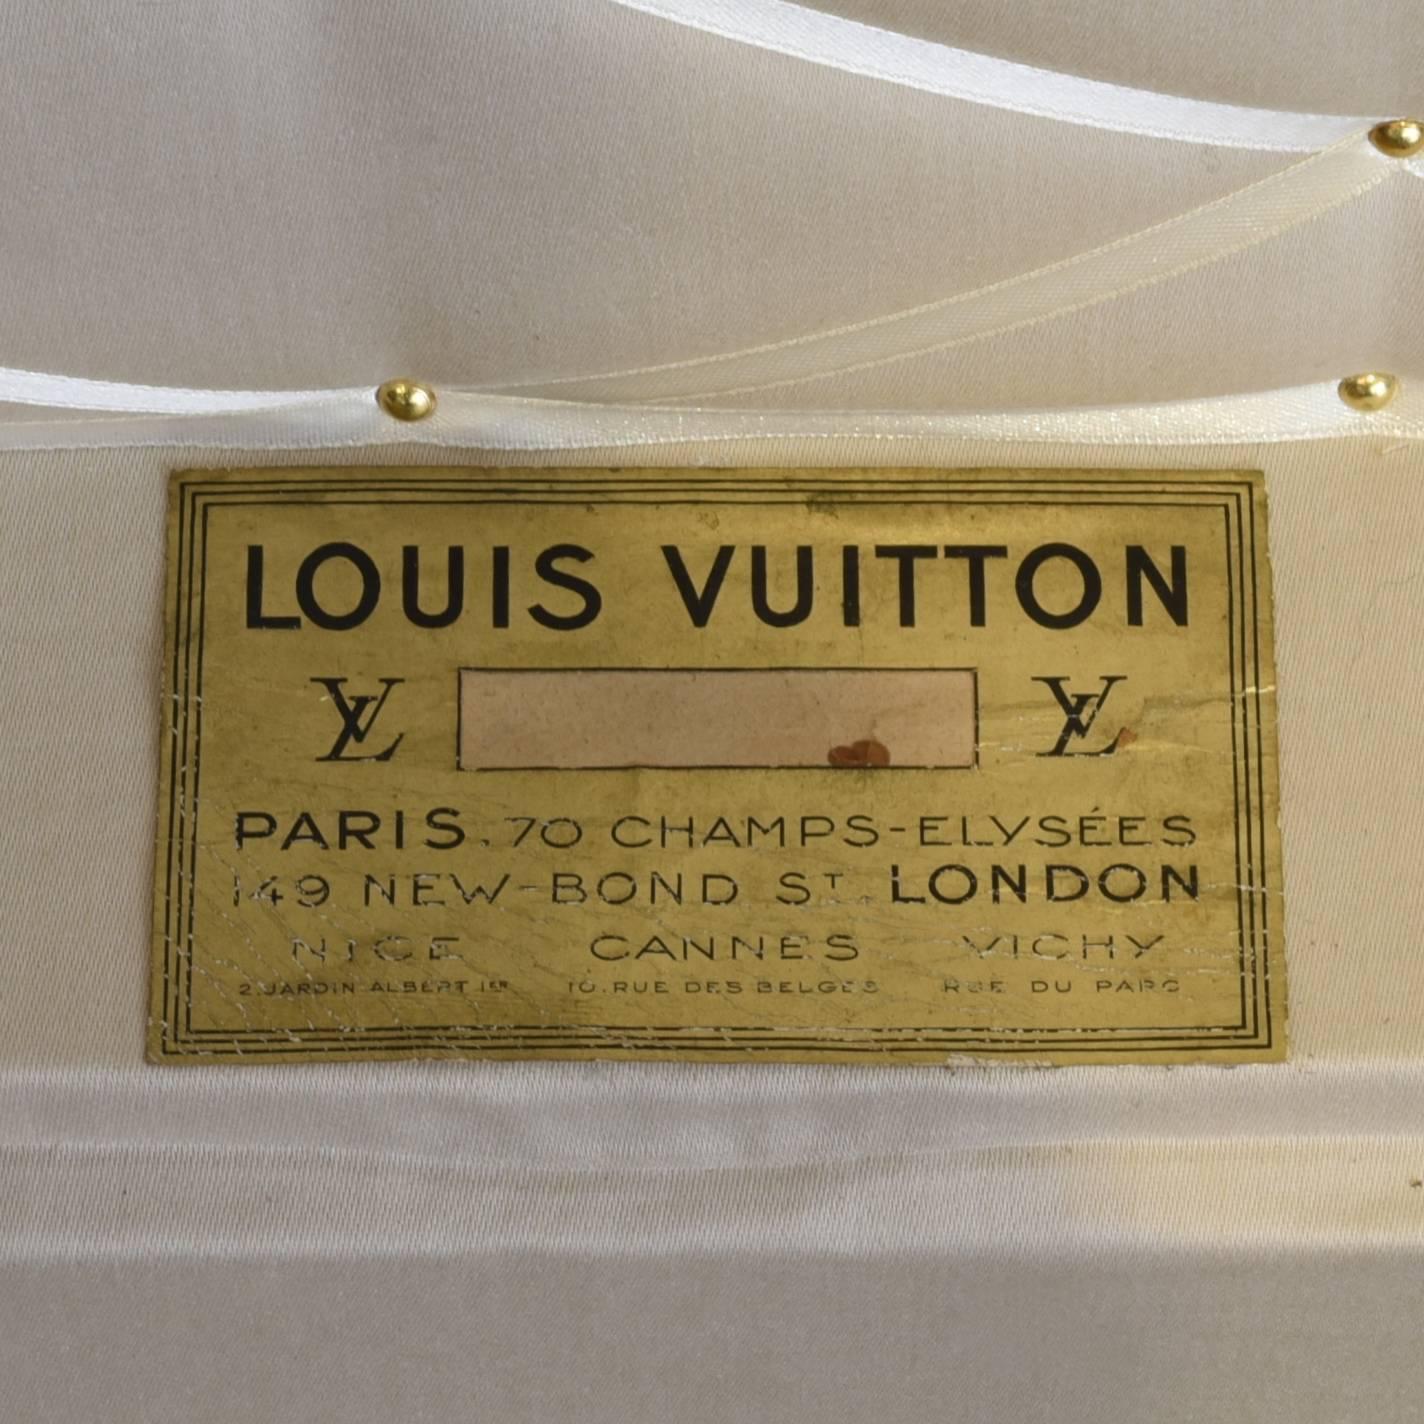 Louis Vuitton Steel Bound Cabin Trunk at 1stdibs